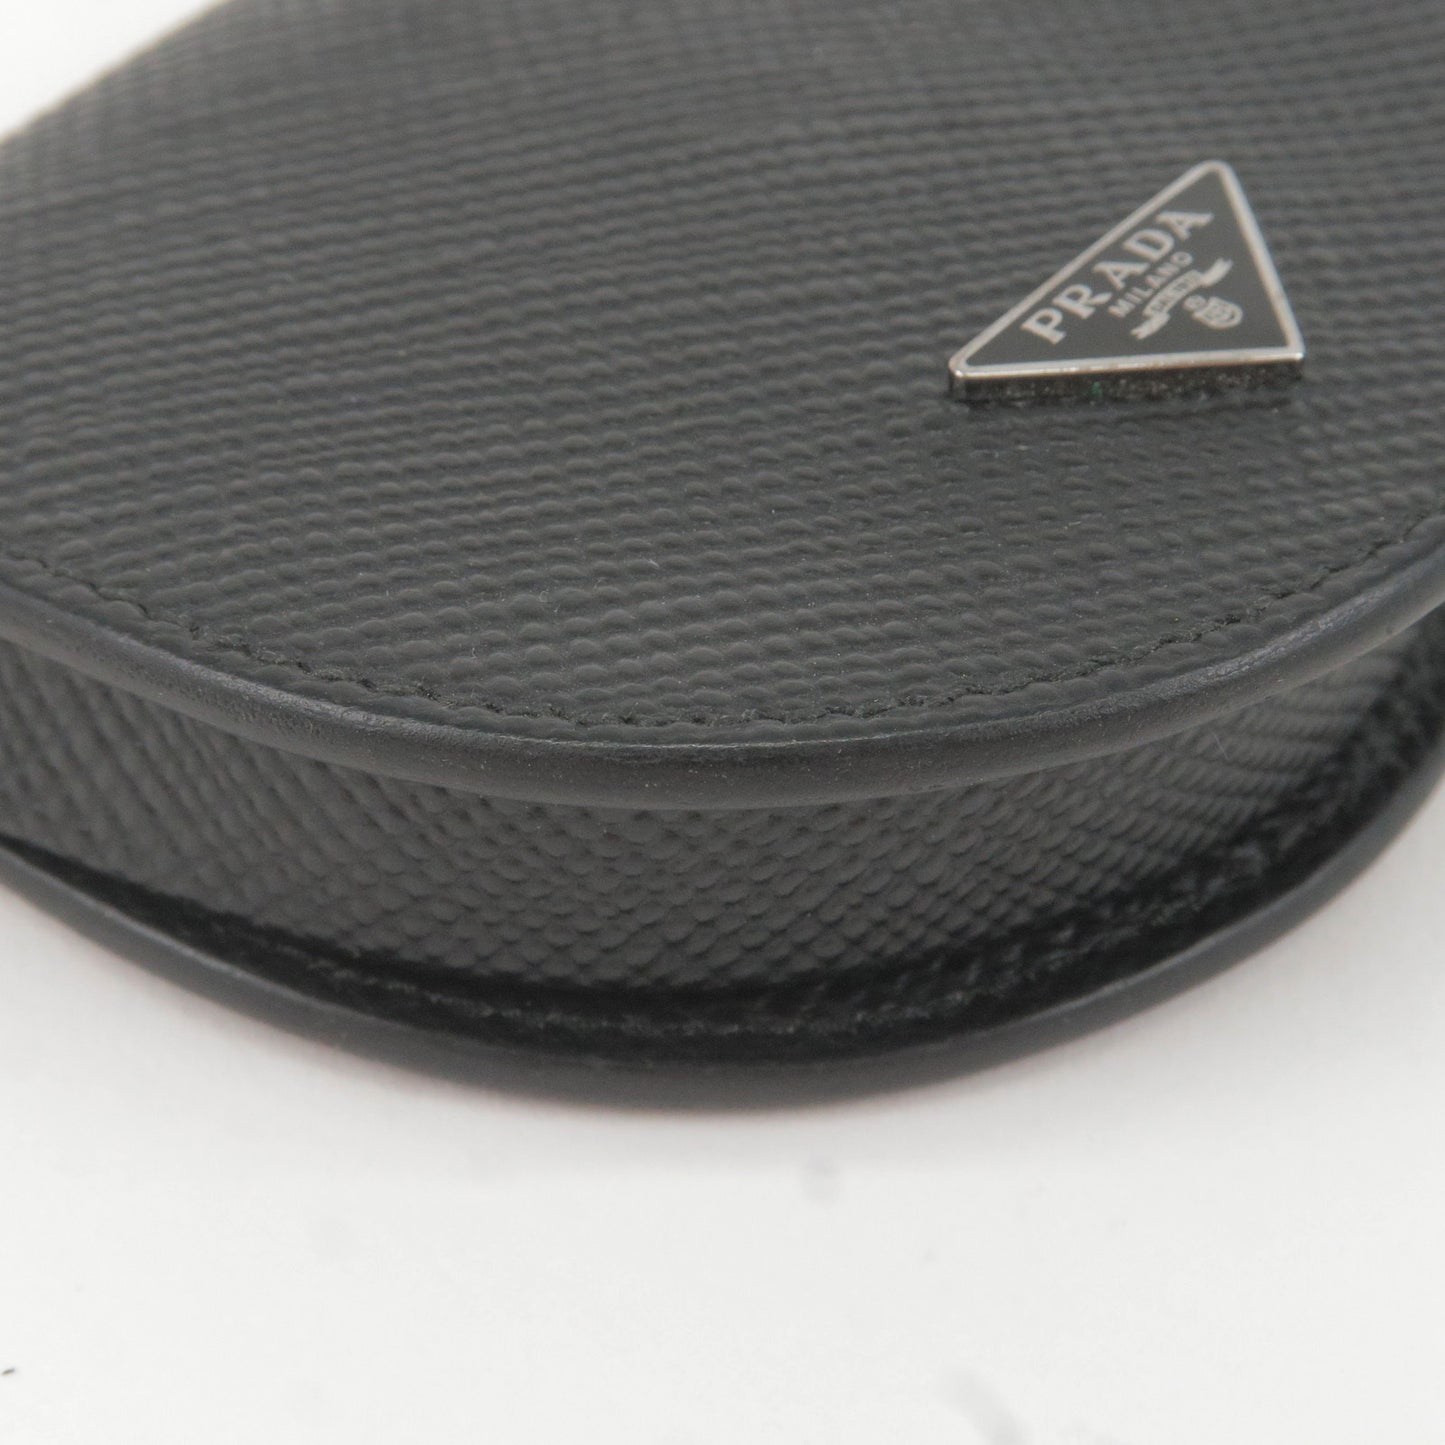 PRADA Logo Leather Coin Case Mini Wallet Black Silver